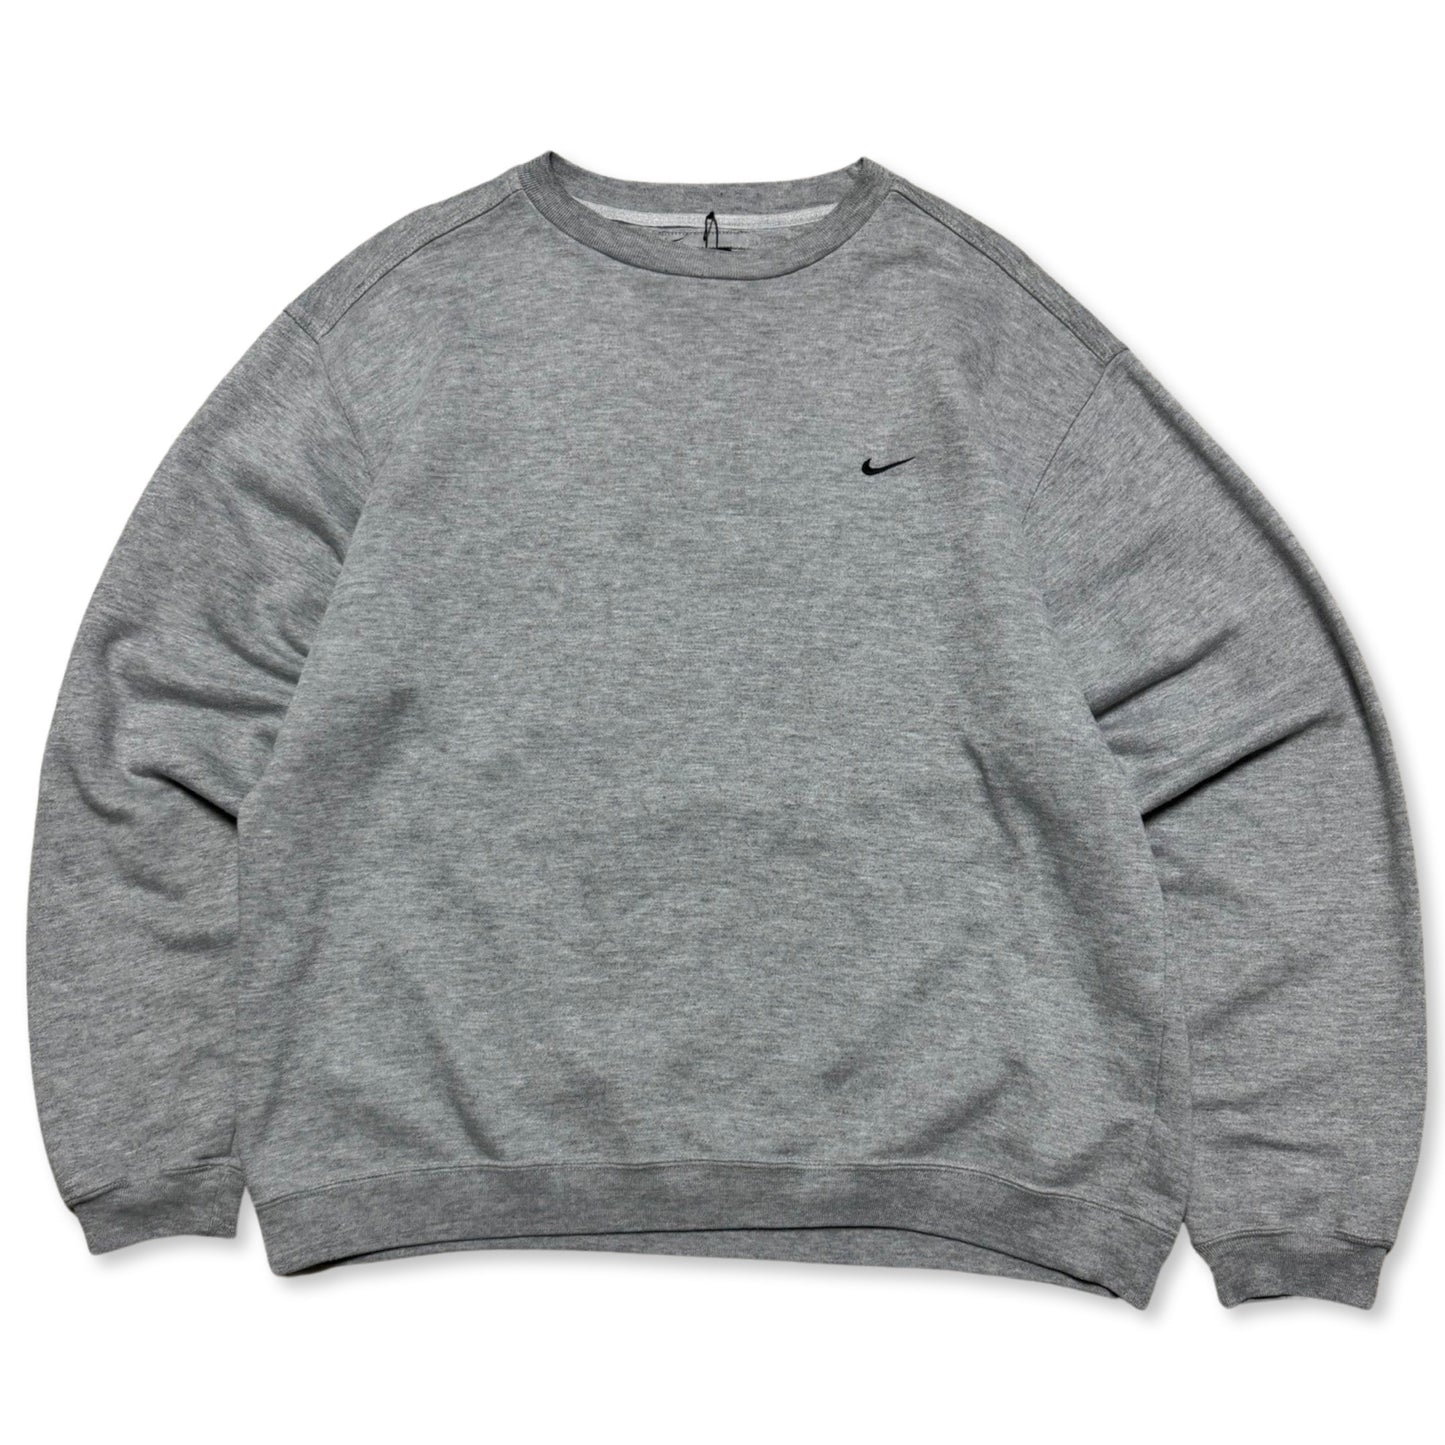 2000s Nike Side Swoosh Sweatshirt (Large)